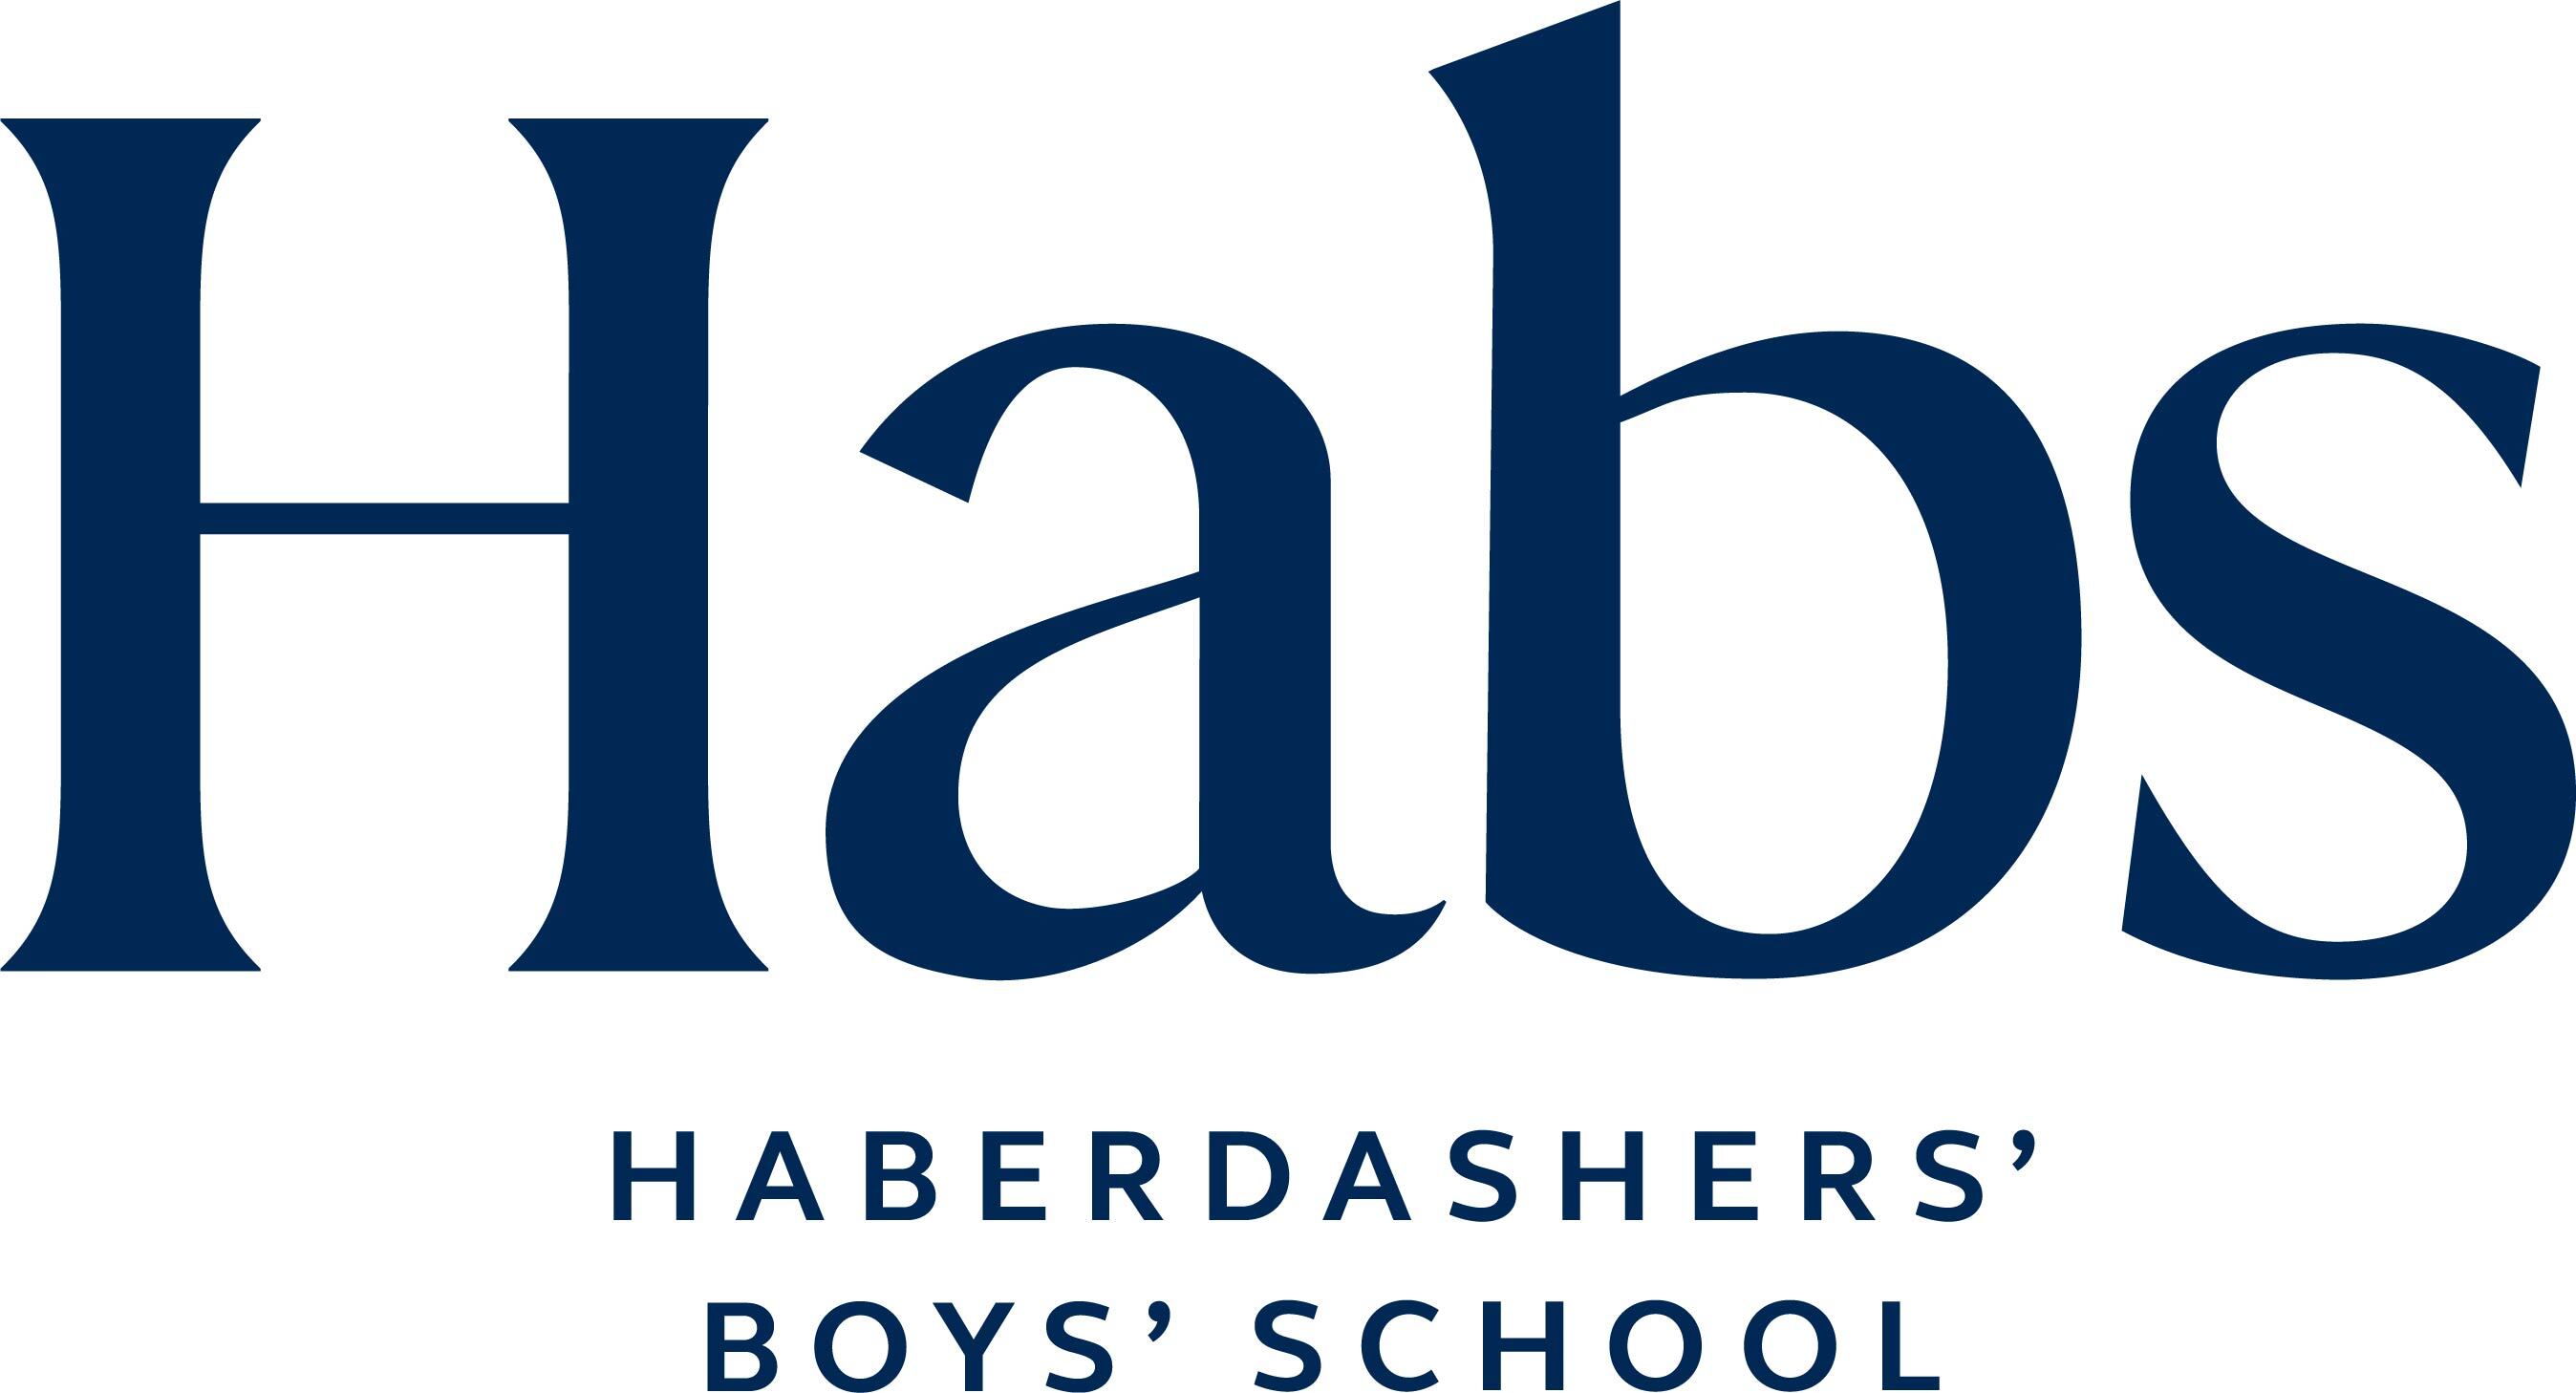 The Haberdashers' Boys' School 